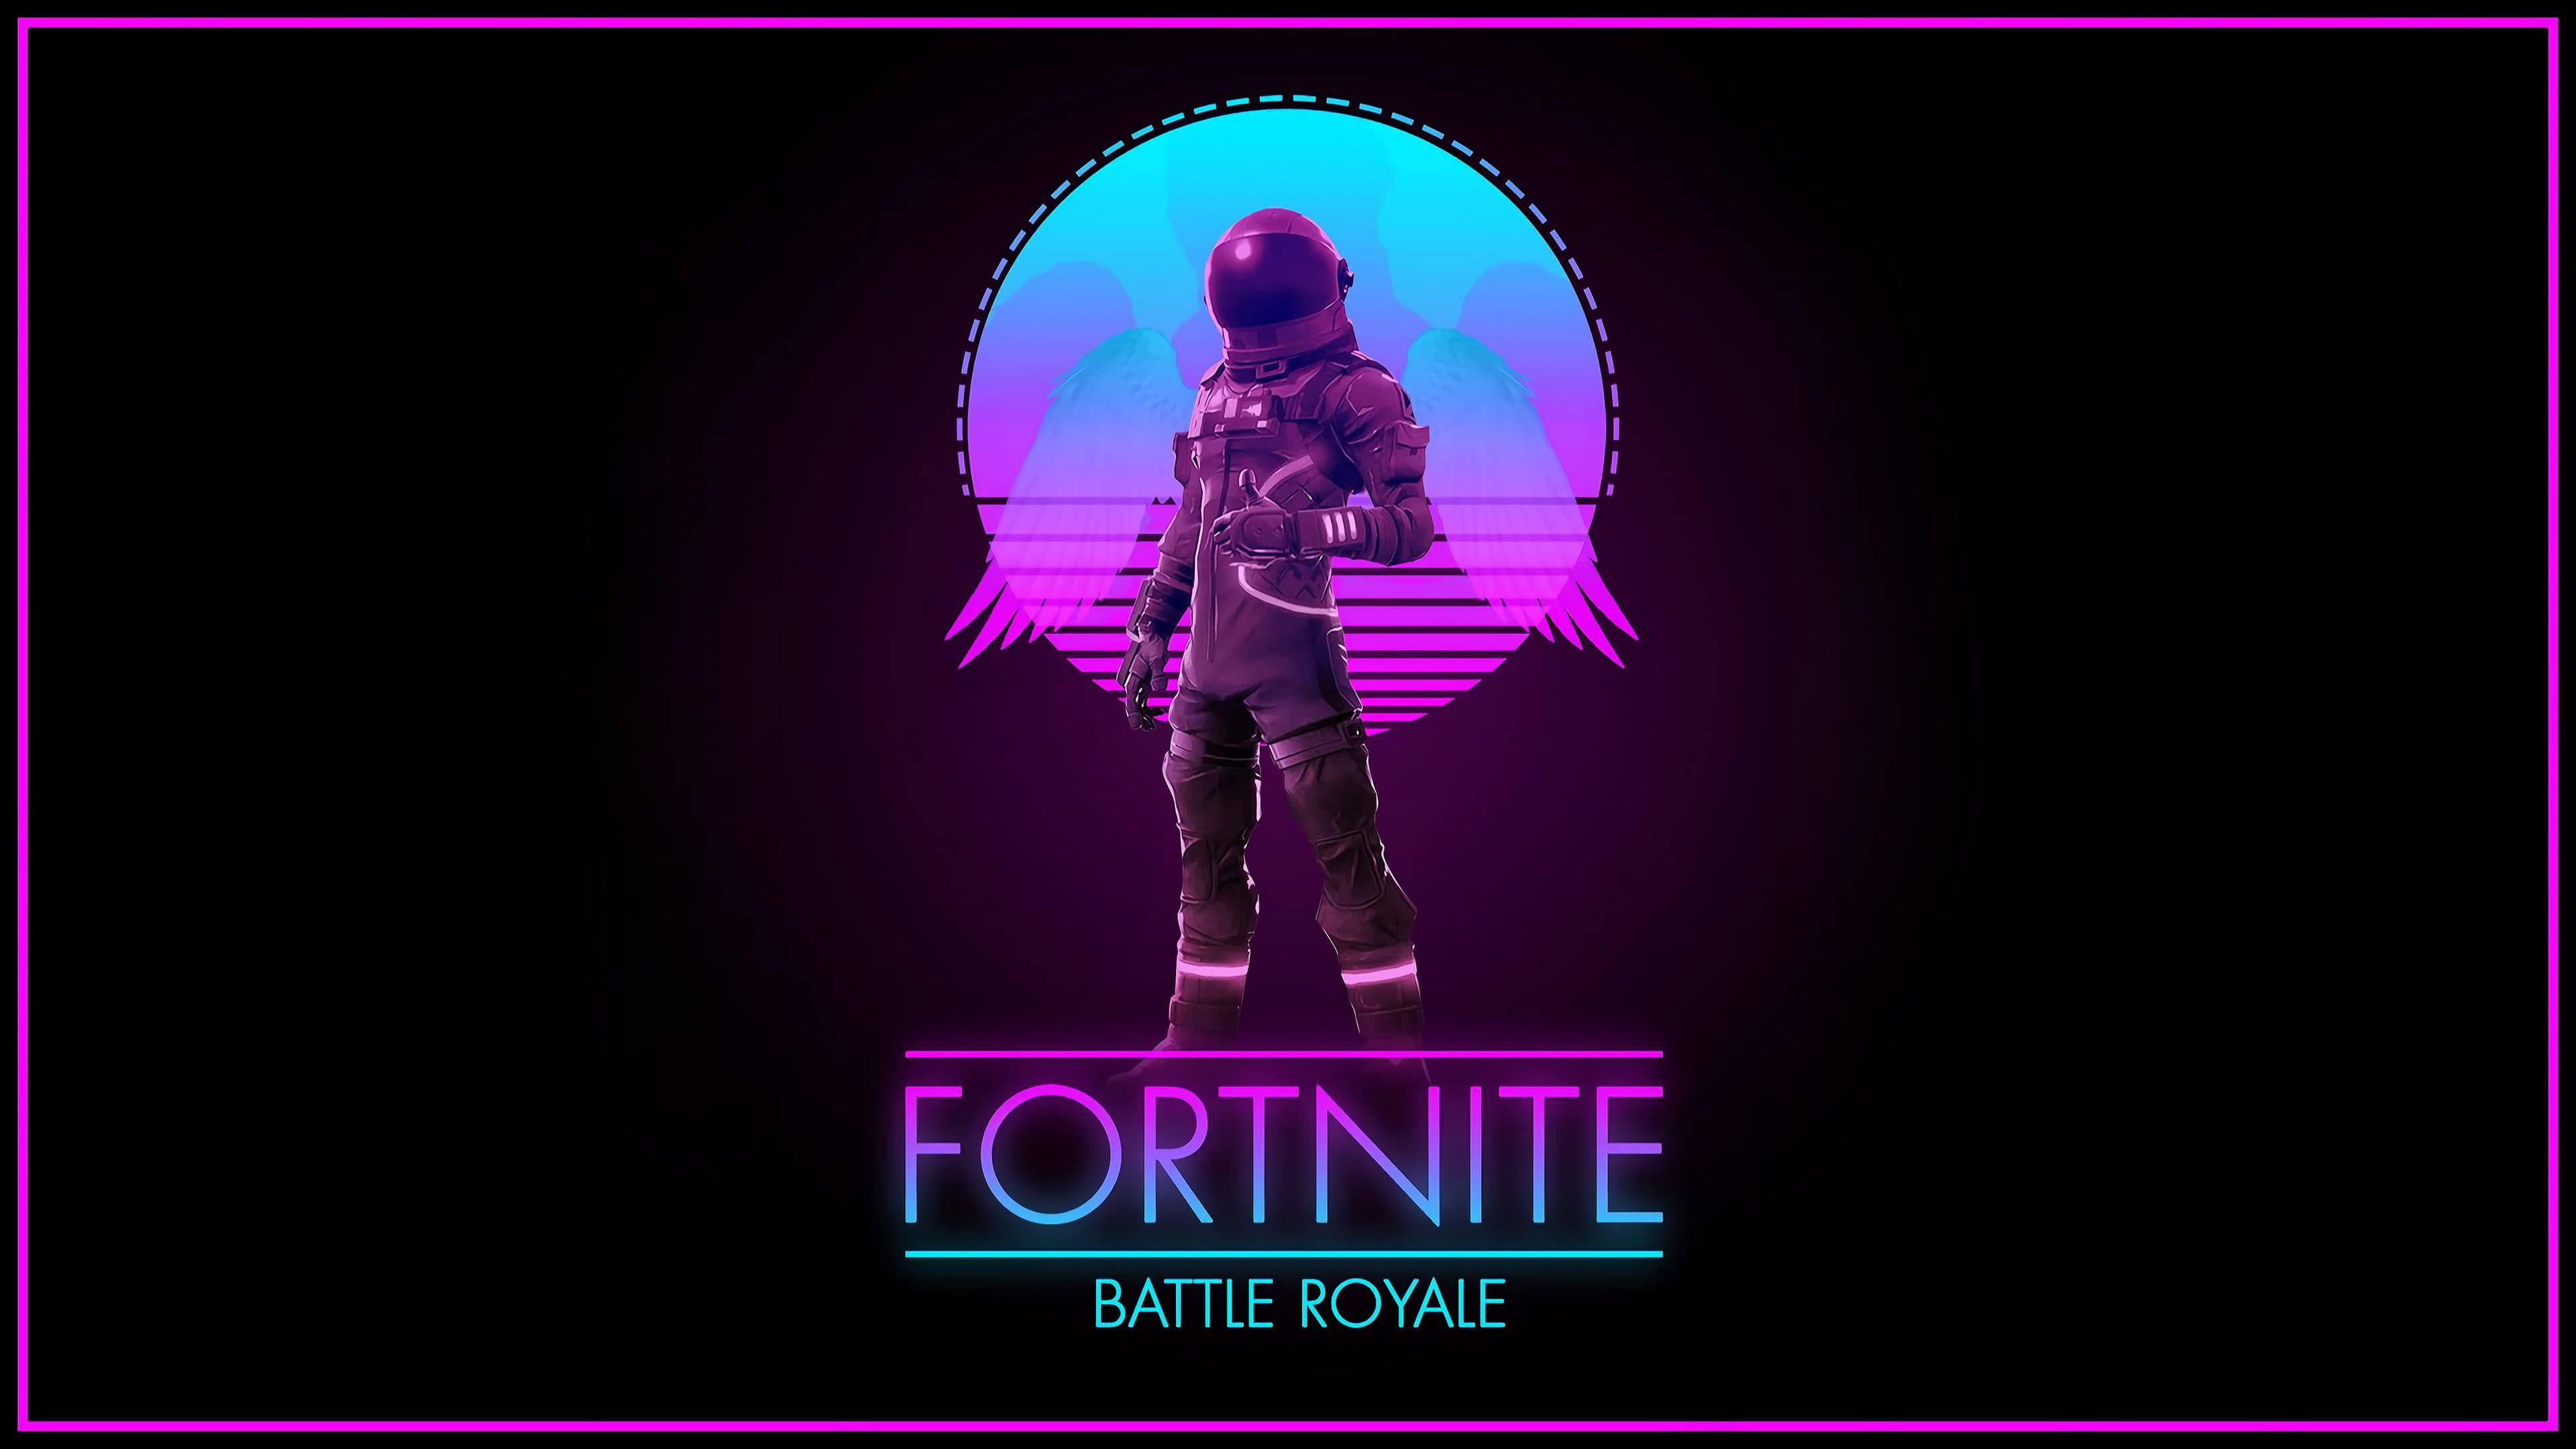 Fornite Battle Royale Logo - Fortnite Battle Royale Logo UHD 4K Wallpaper | Pixelz